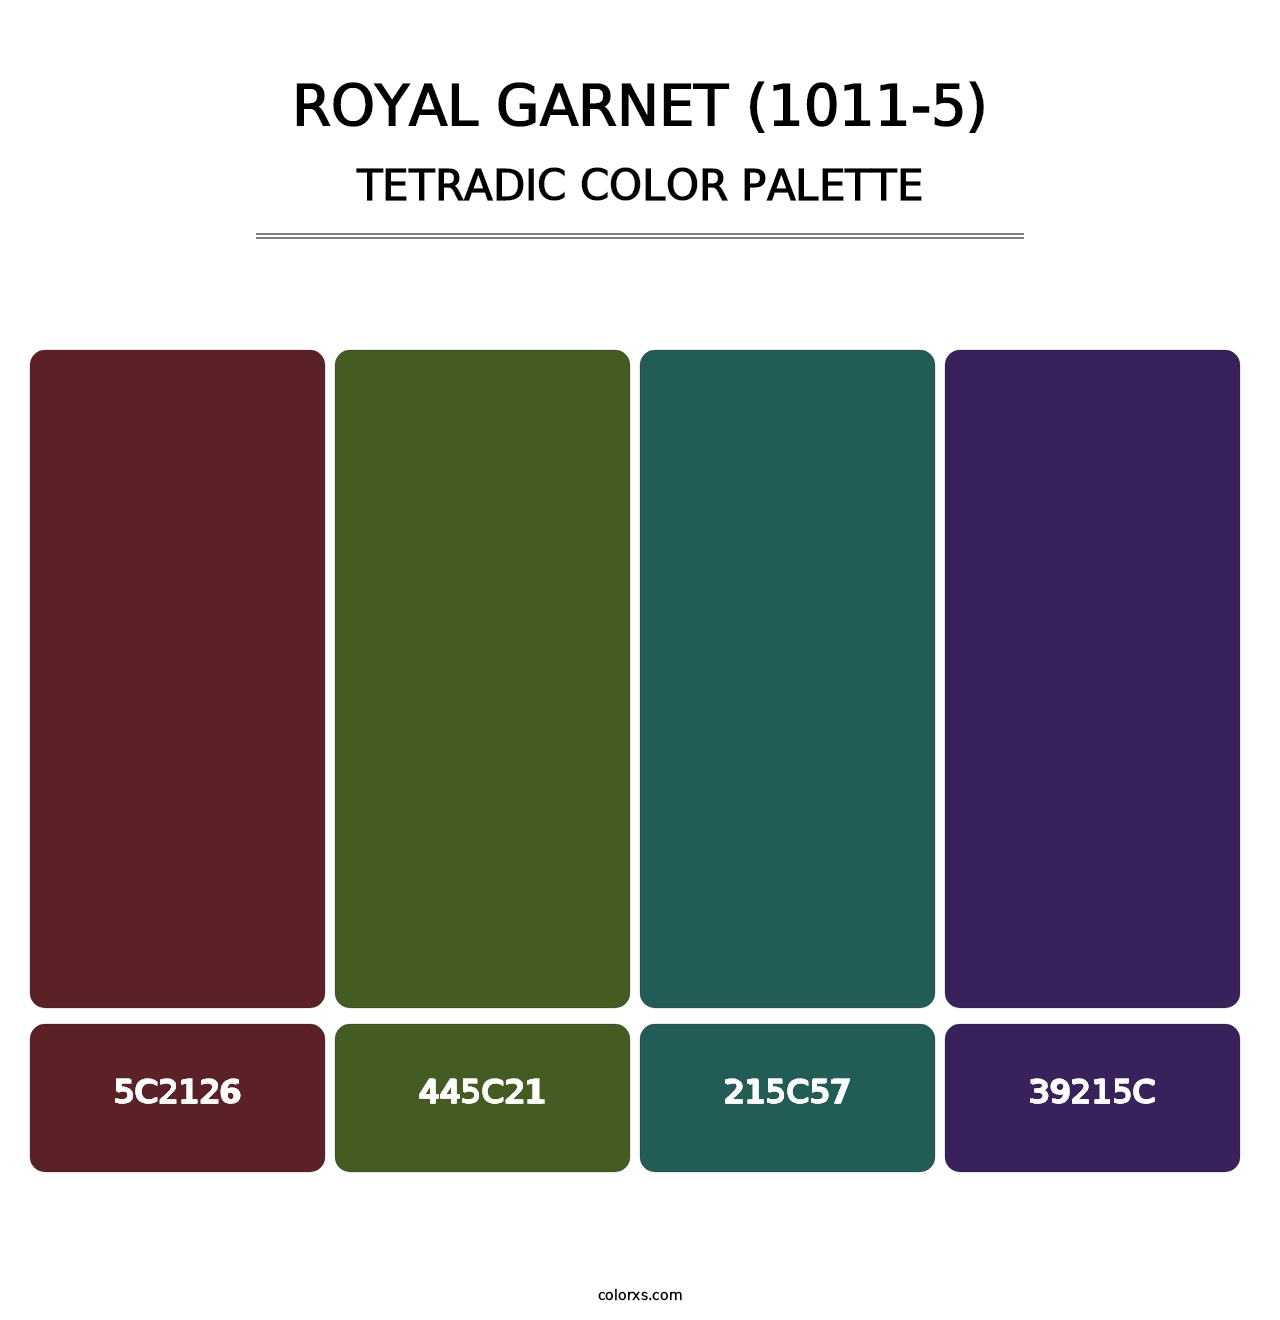 Royal Garnet (1011-5) - Tetradic Color Palette